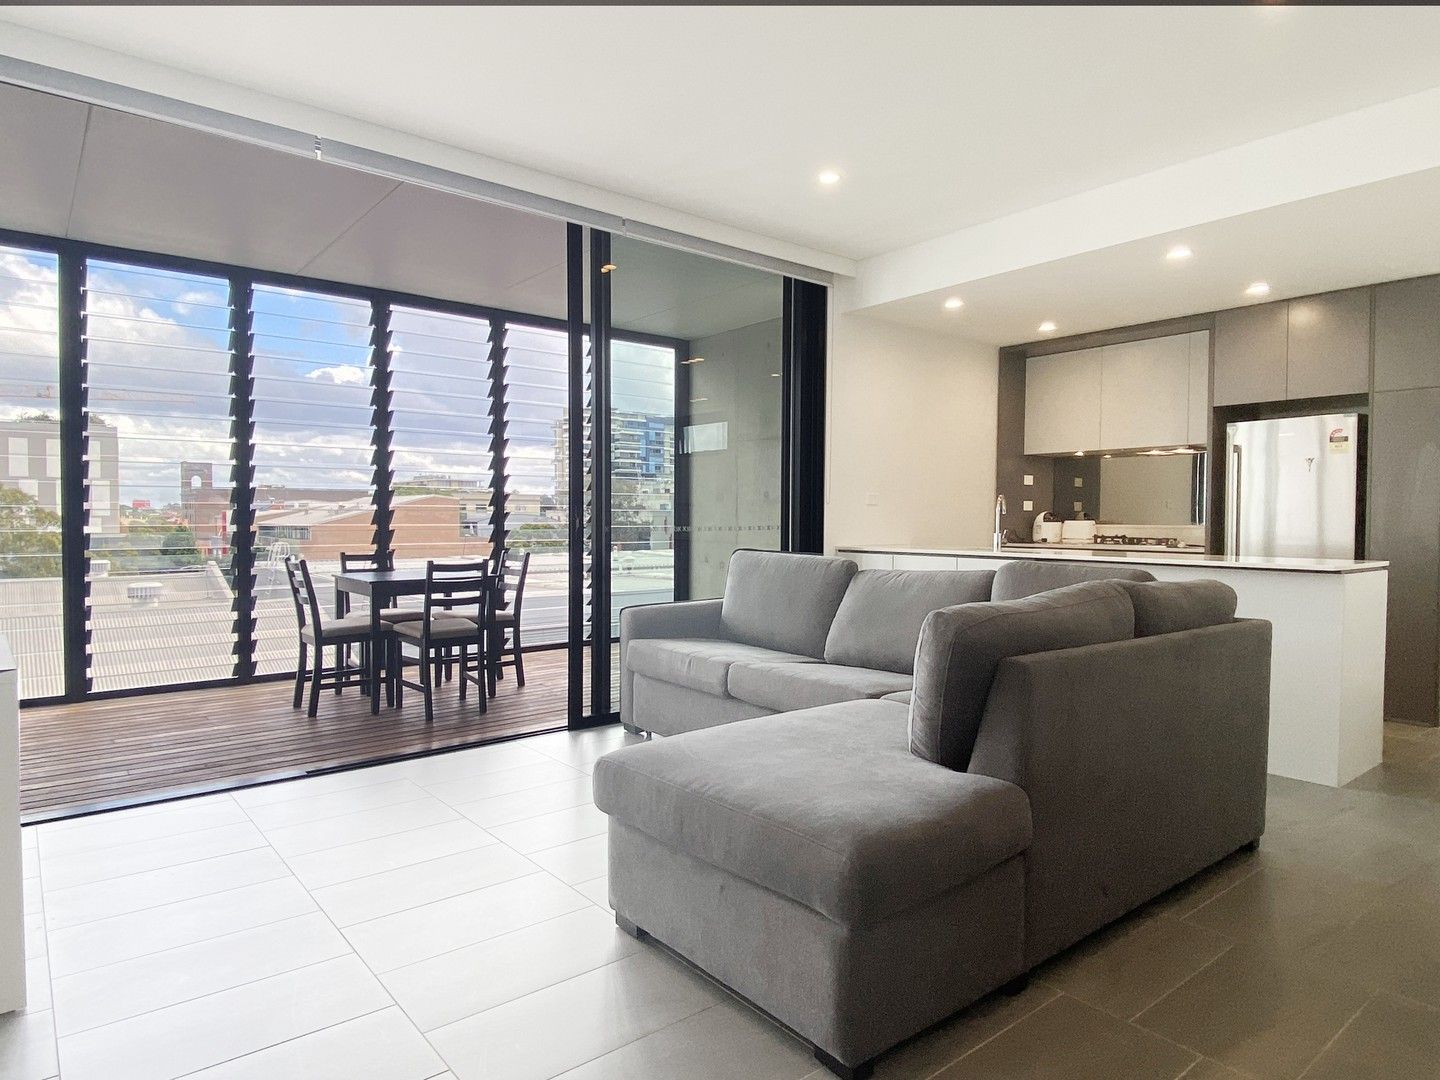 2 bedrooms Apartment / Unit / Flat in 503E/96 Parramatta Rd CAMPERDOWN NSW, 2050